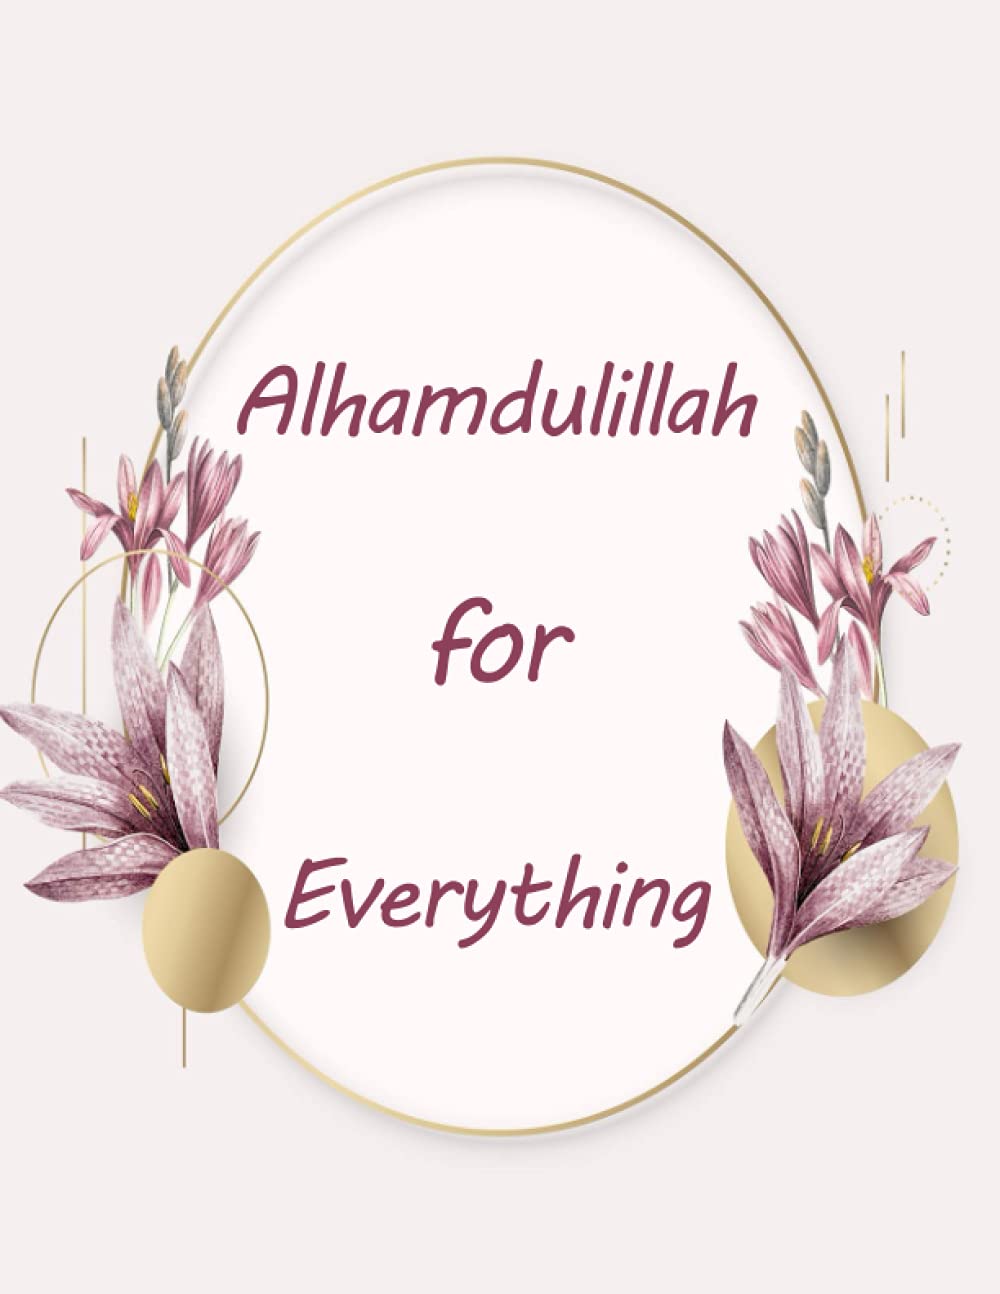 alhamdulillah for everything